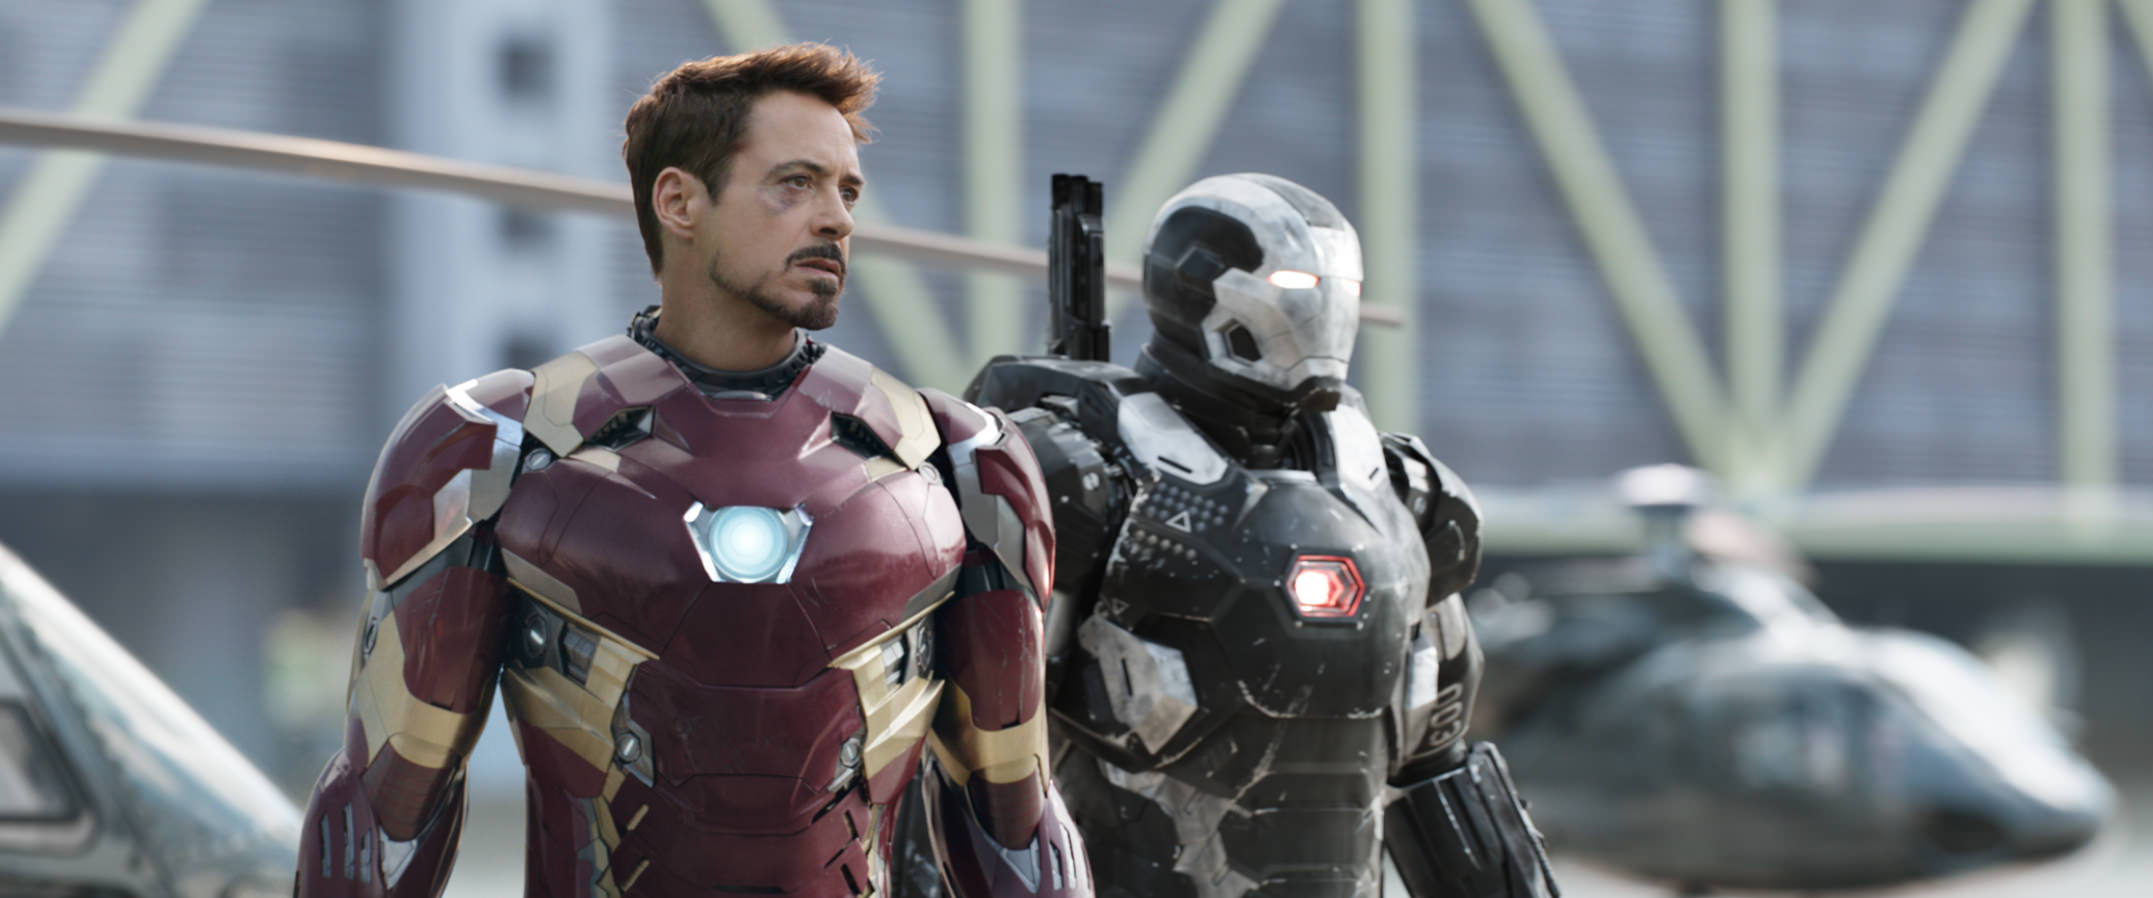 Marvel's Captain America: Civil War..L to R: Iron Man/Tony Stark (Robert Downey Jr.) and War Machine/James Rhodes (Don Cheadle)..Photo Credit: Film Frame..© Marvel 2016